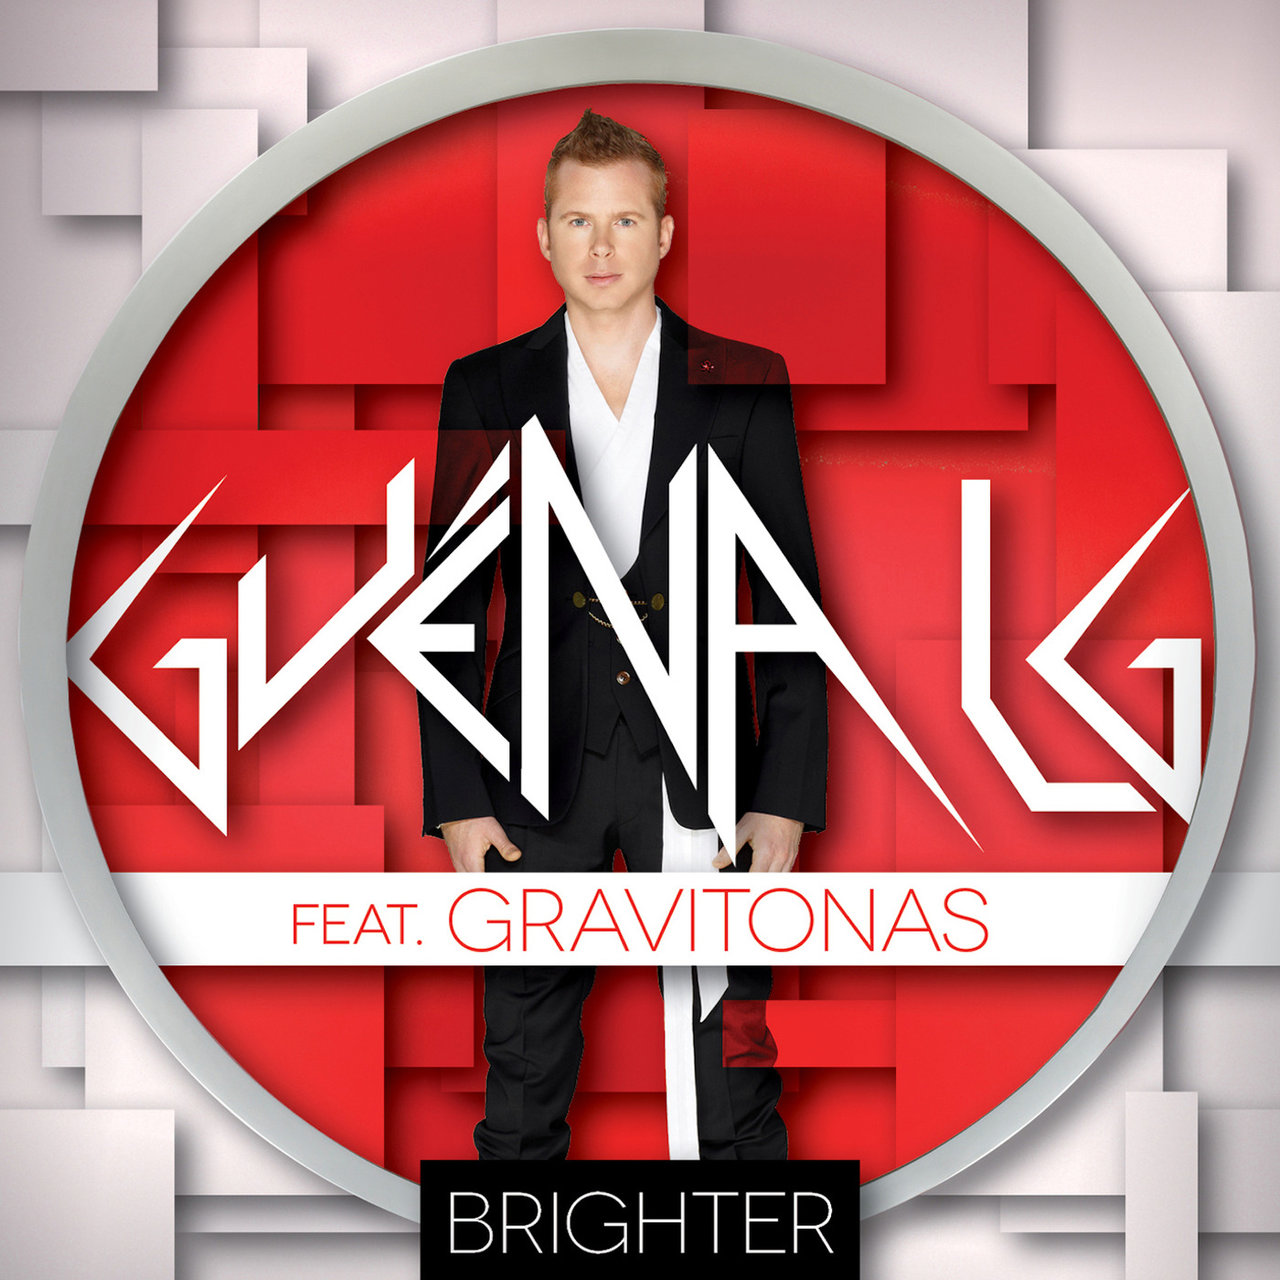 Guena LG featuring Gravitonas — Brighter cover artwork